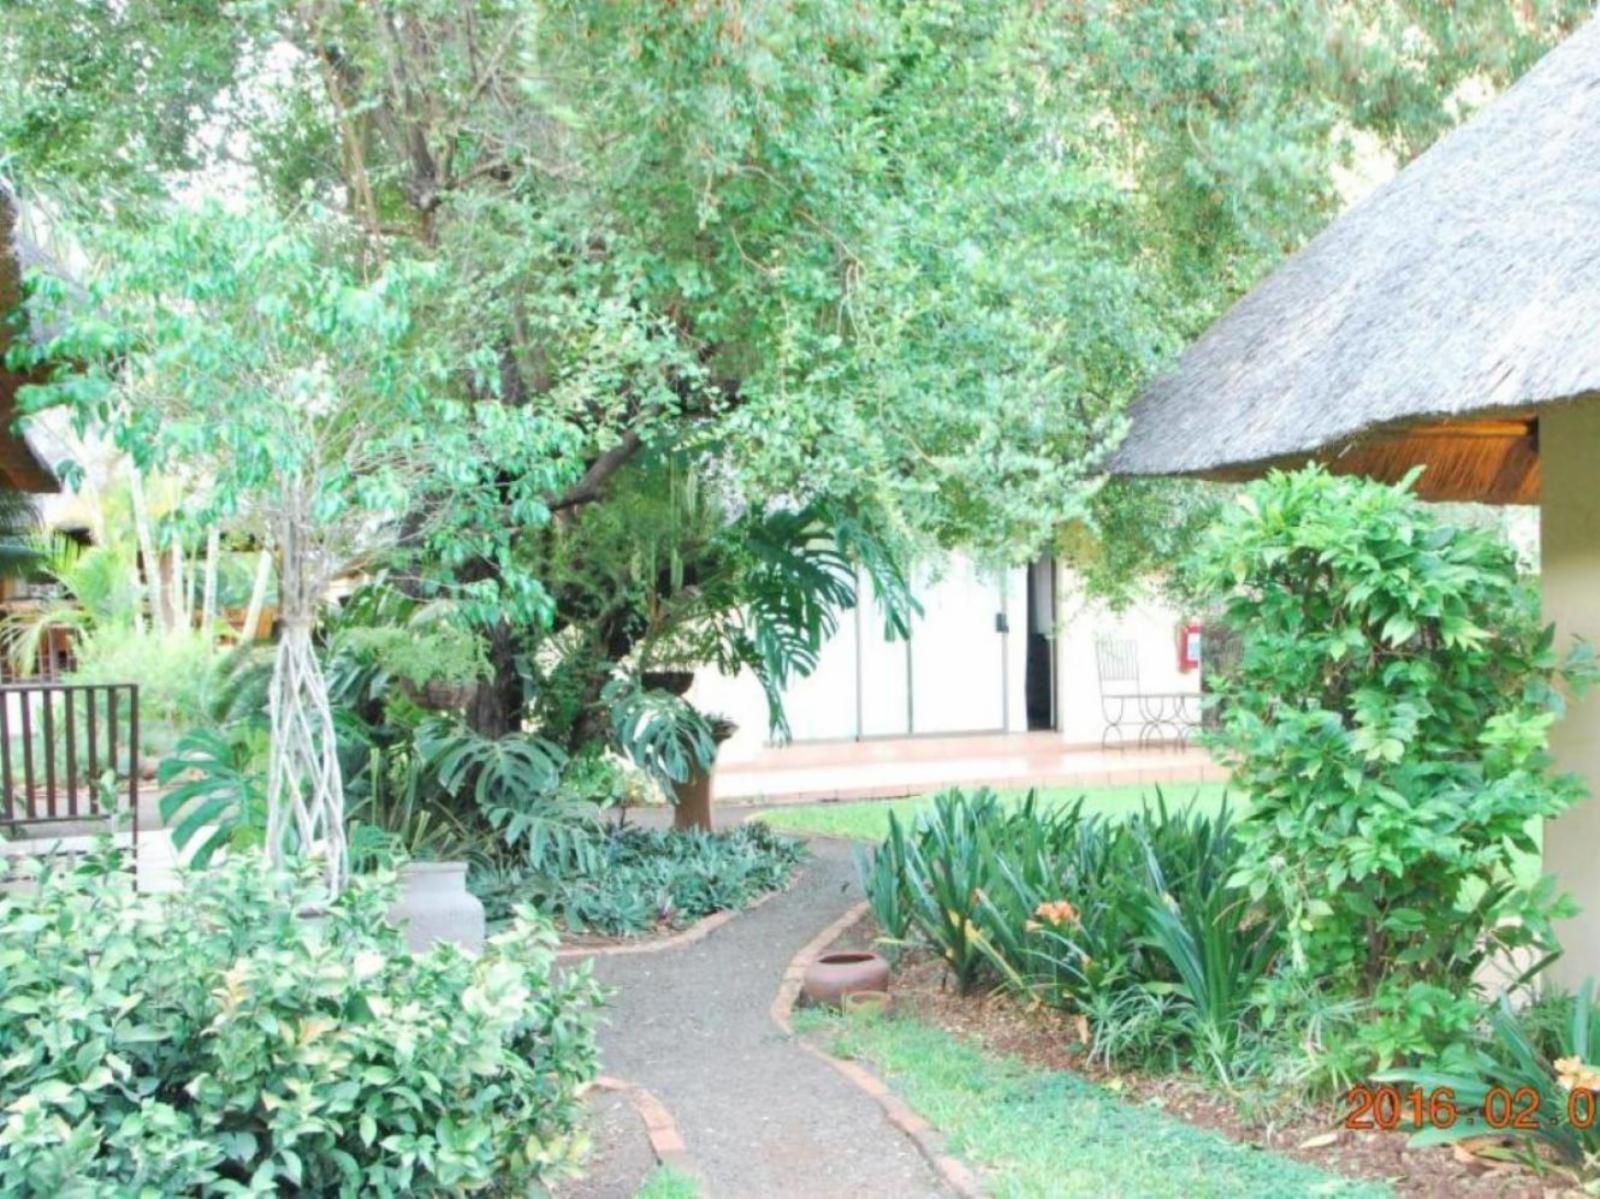 Acasia Guest Lodge Komatipoort Mpumalanga South Africa Plant, Nature, Garden